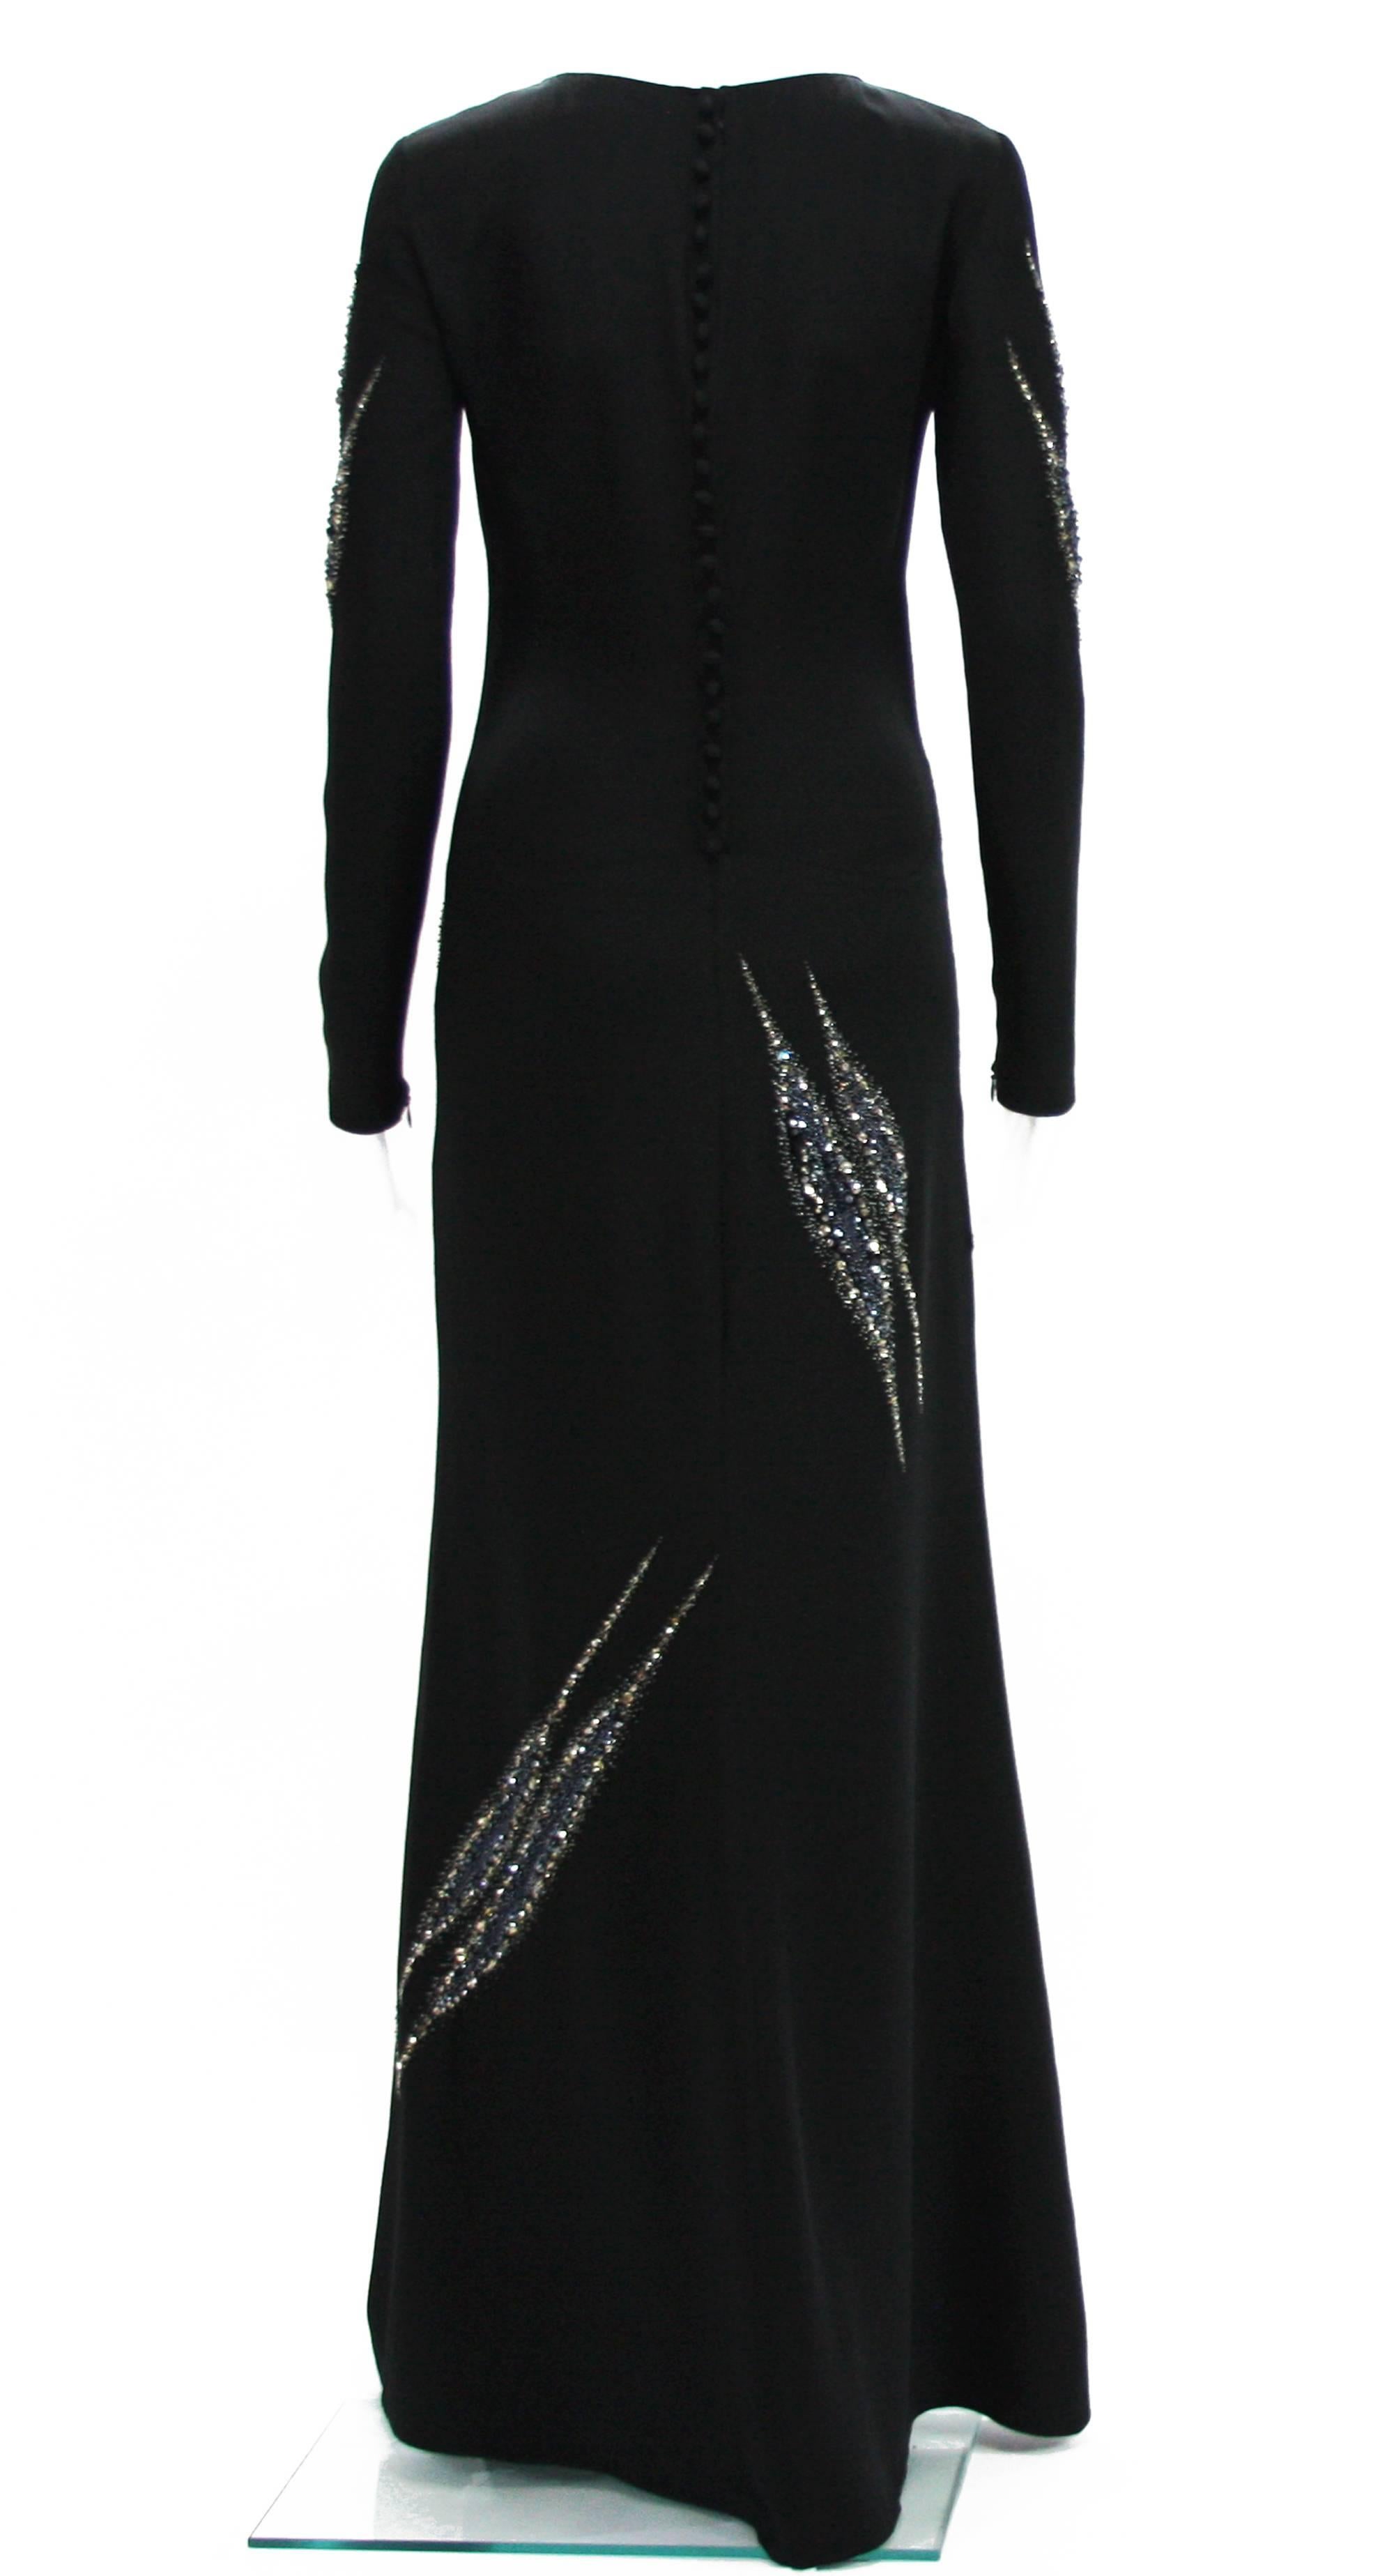 Black $8500 Emilio Pucci Embellished Gown Eva Longoria Wore to the ALMA Awards 38 US 4